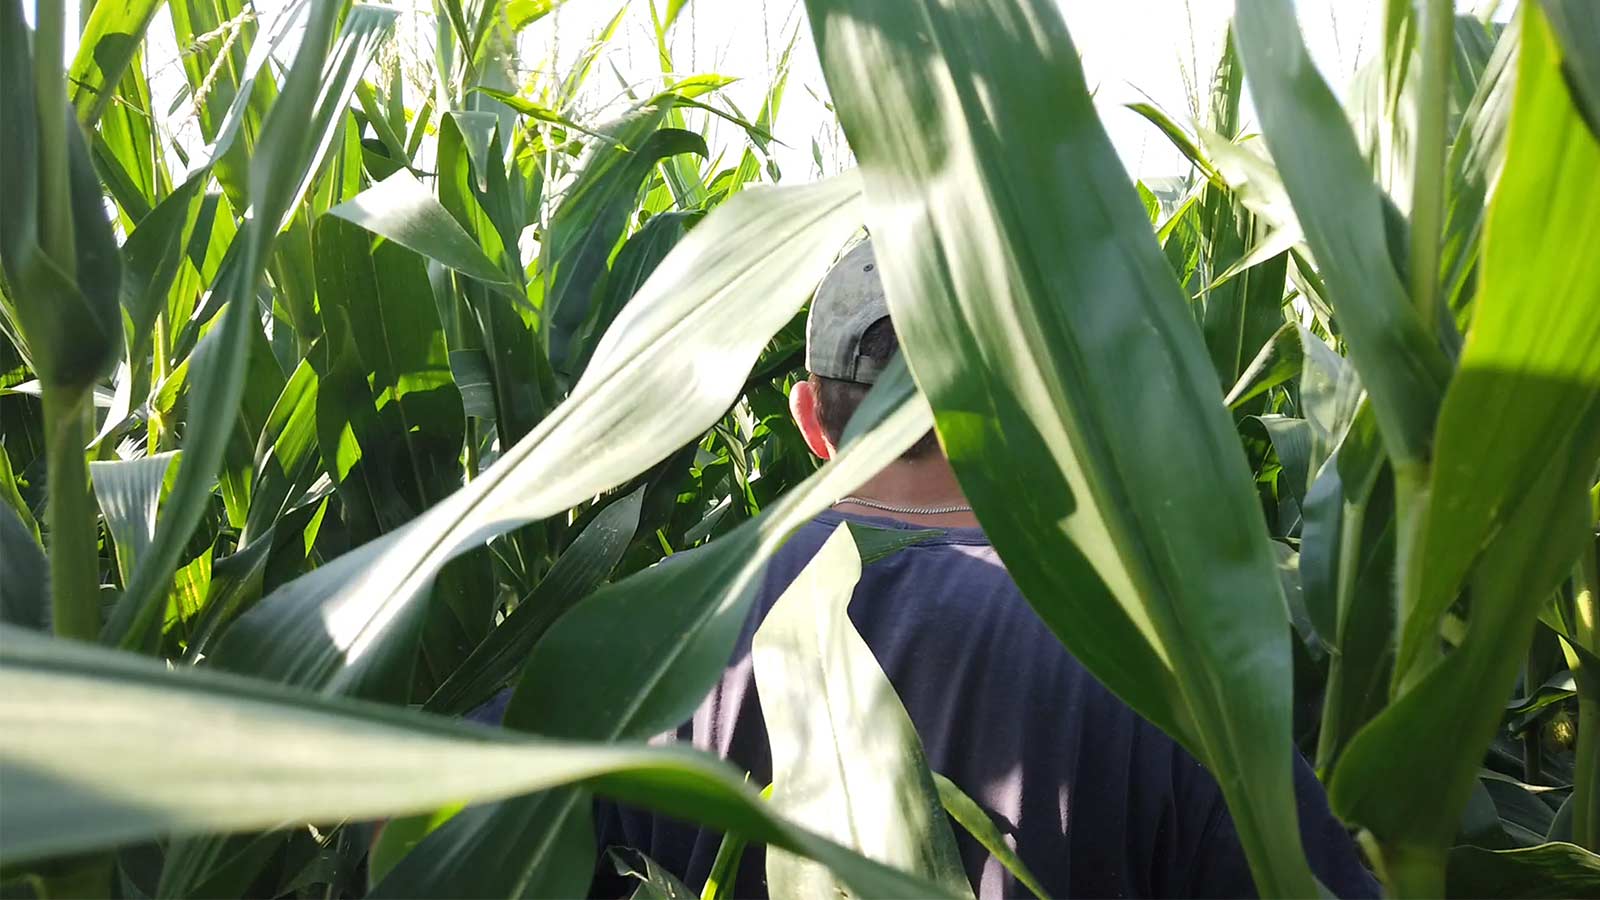 Farming-walking-through-a-field-of-corn